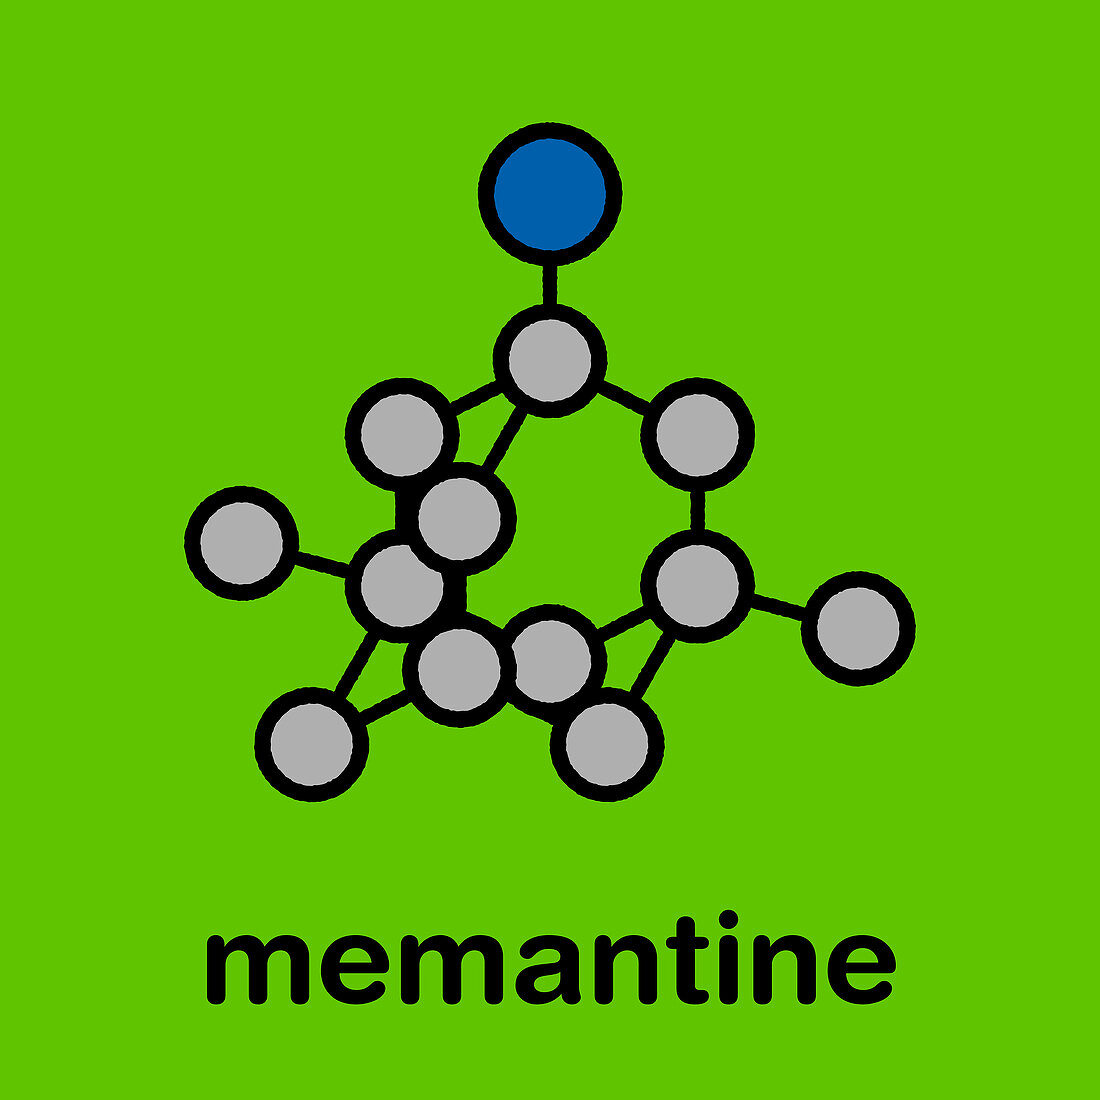 Memantine Alzheimer's disease drug molecule, illustration